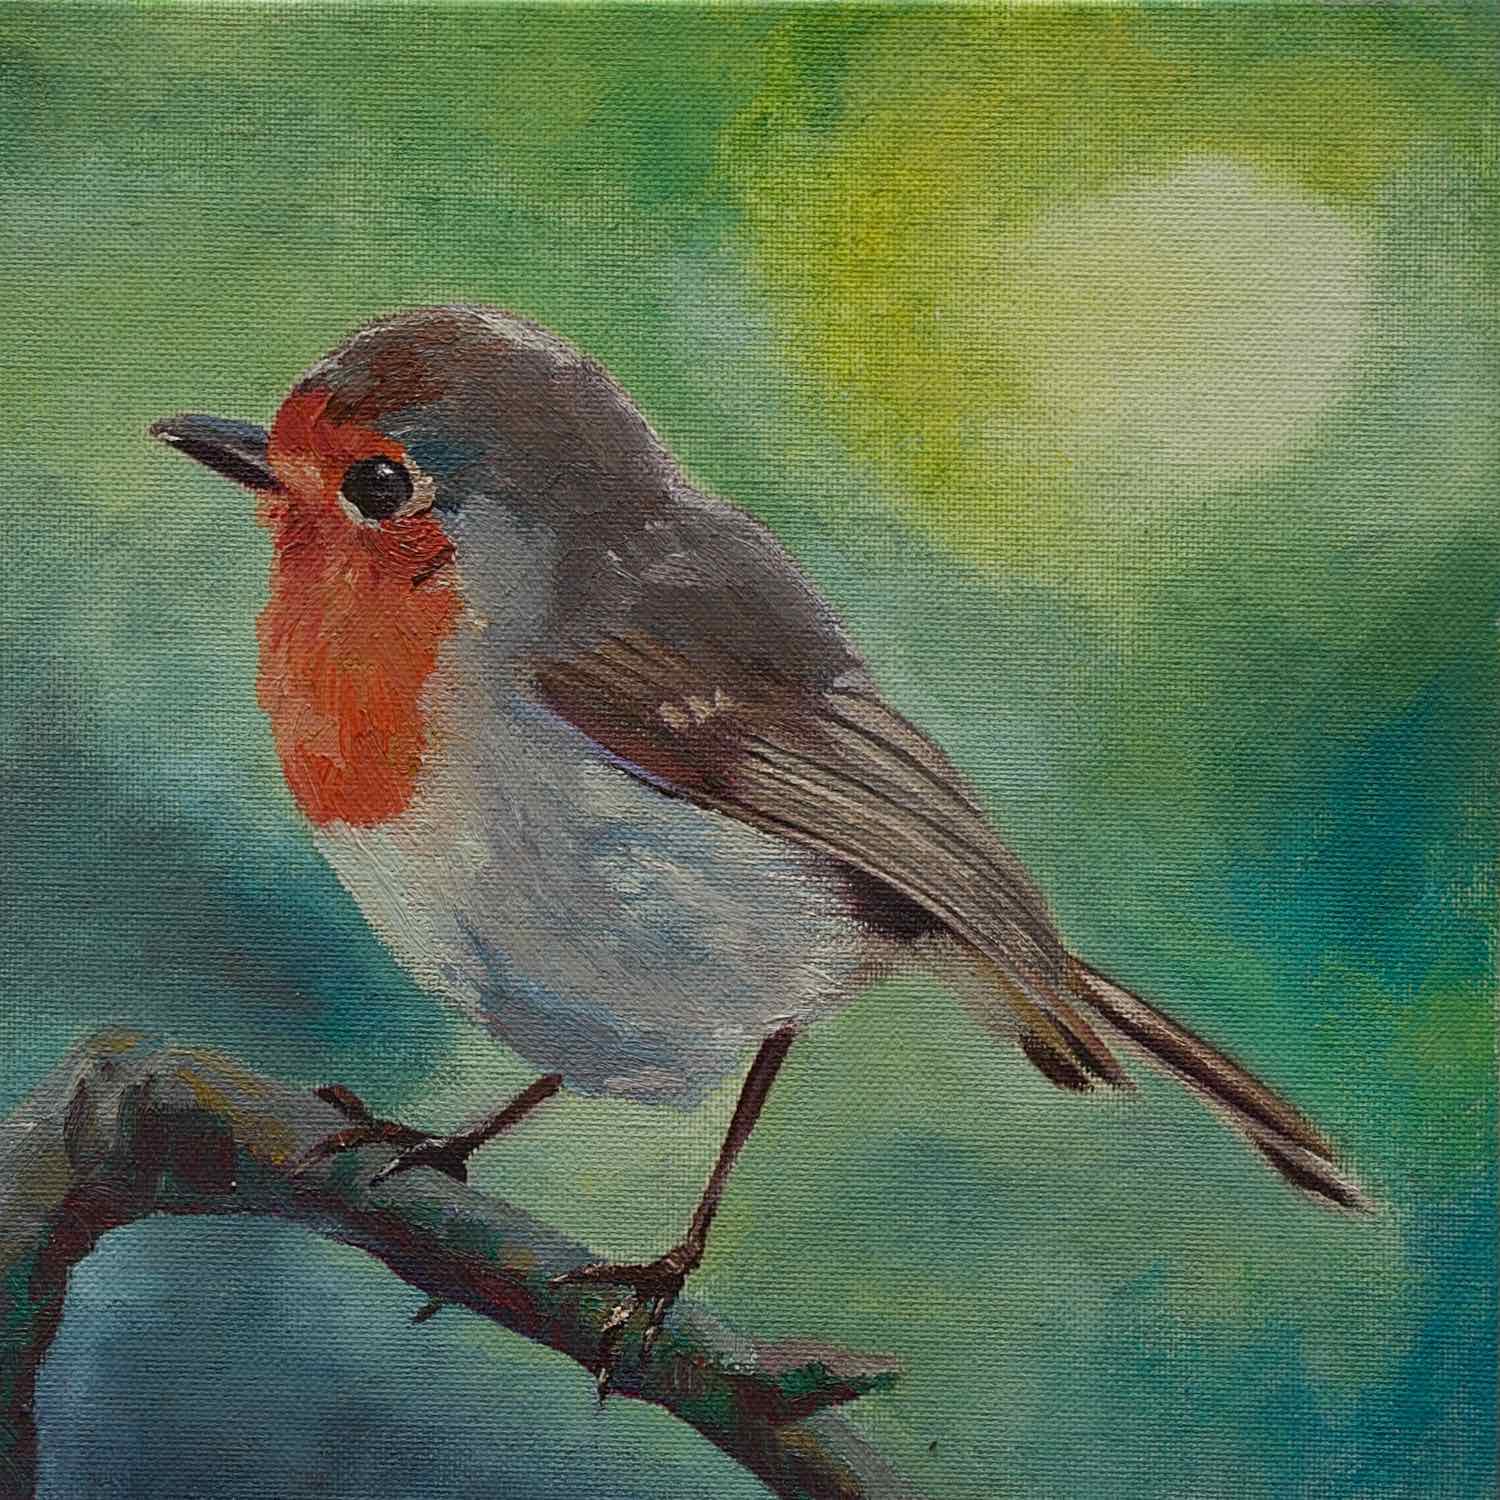 Painting bird Erithacus rubecula